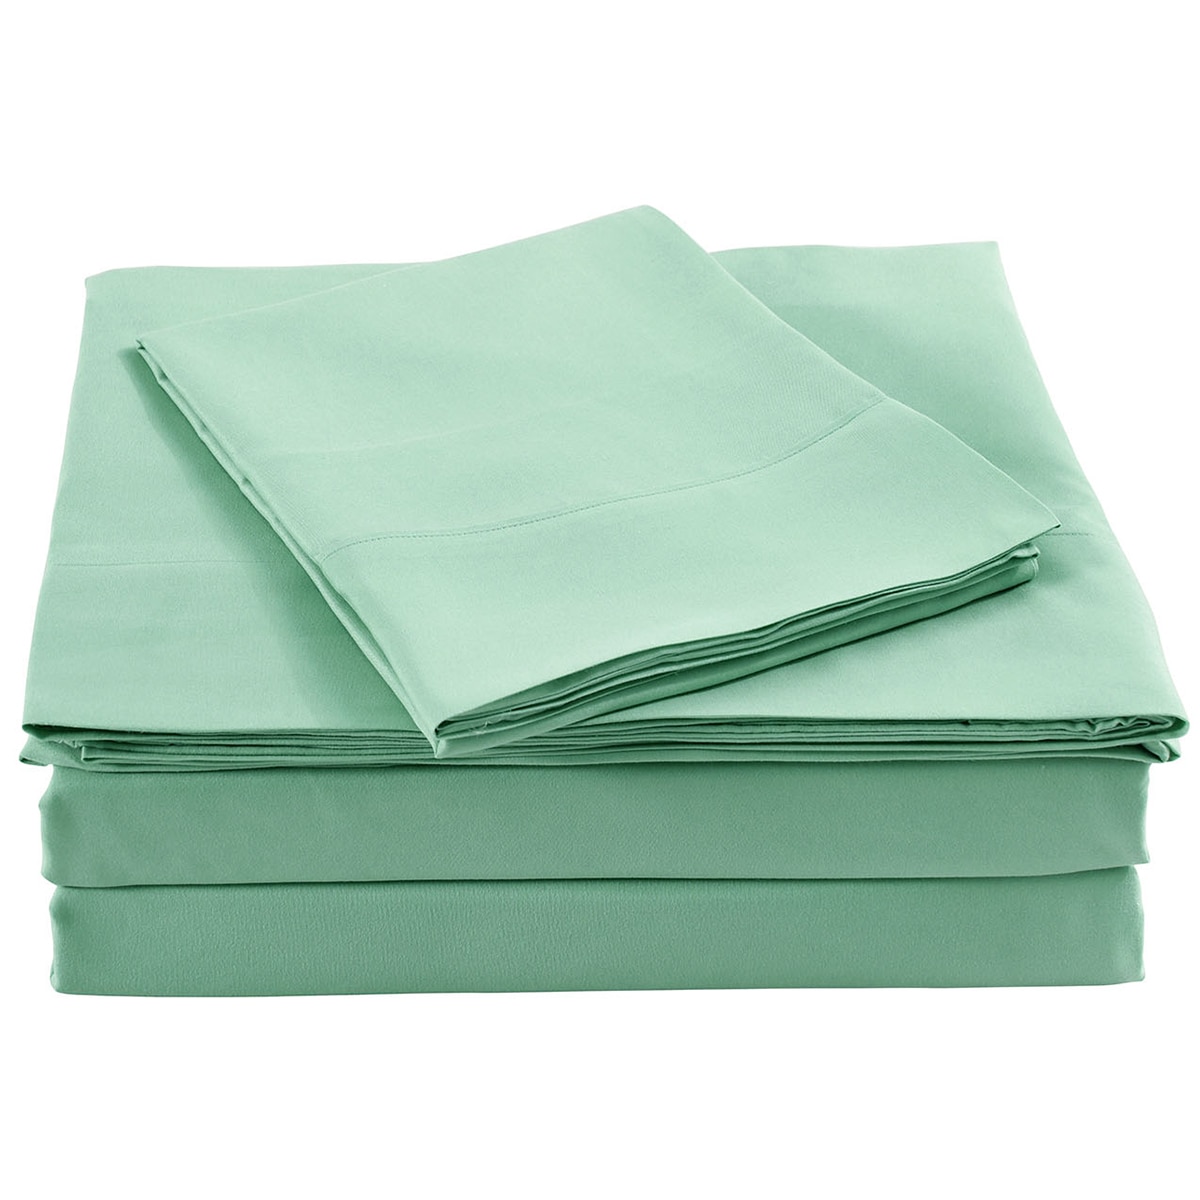 Bdirect Royal Comfort Blended Bamboo Sheet Set Queen - Green Mint